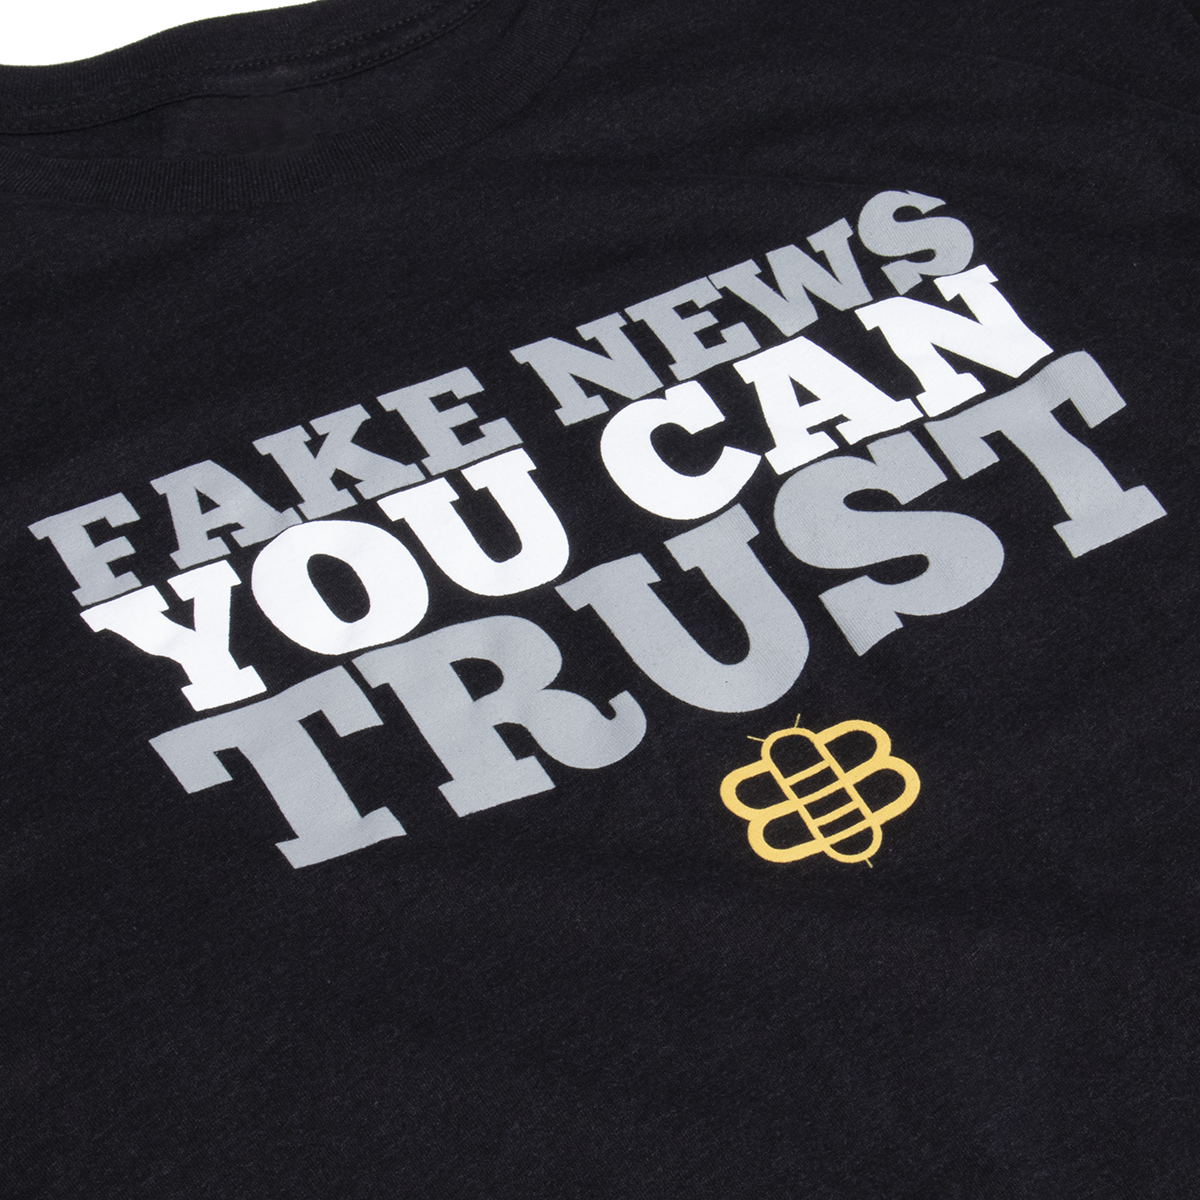 Trust The Process T-Shirts & T-Shirt Designs